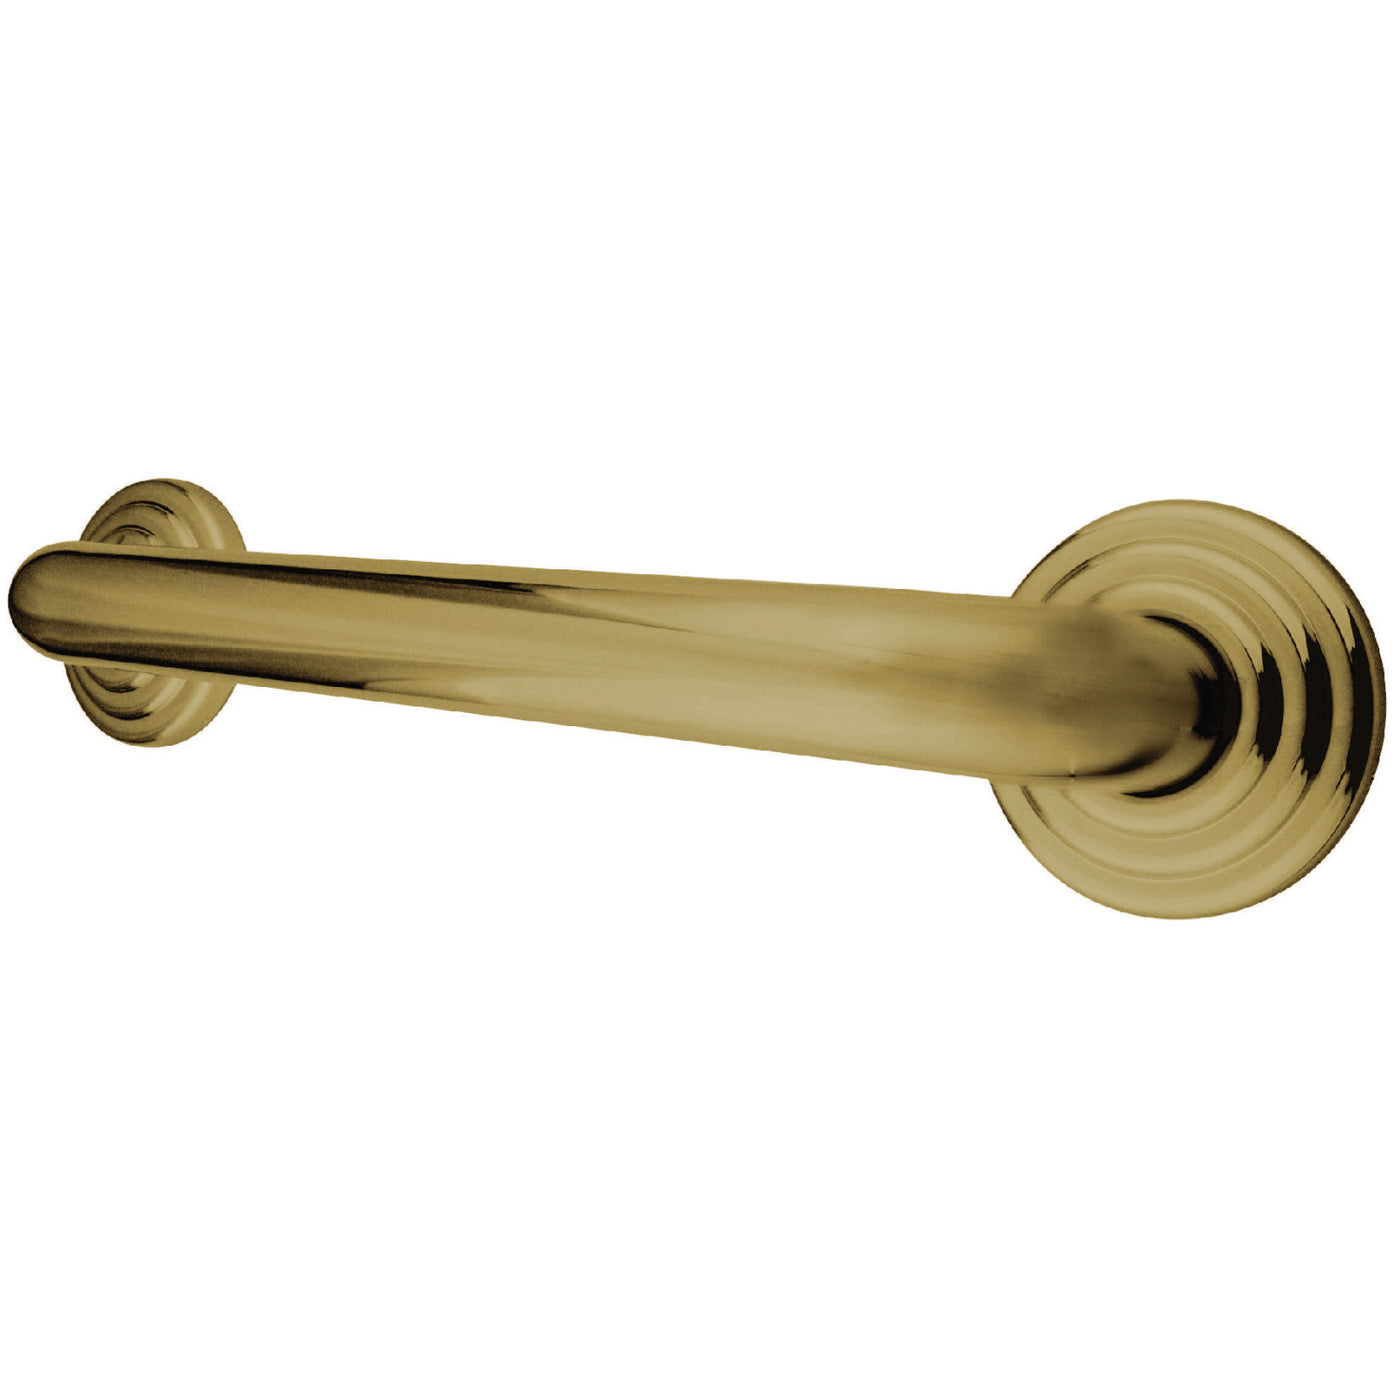 Elements of Design EDR314122 12-Inch Decorative 1-1/4-Inch OD Grab Bar, Polished Brass